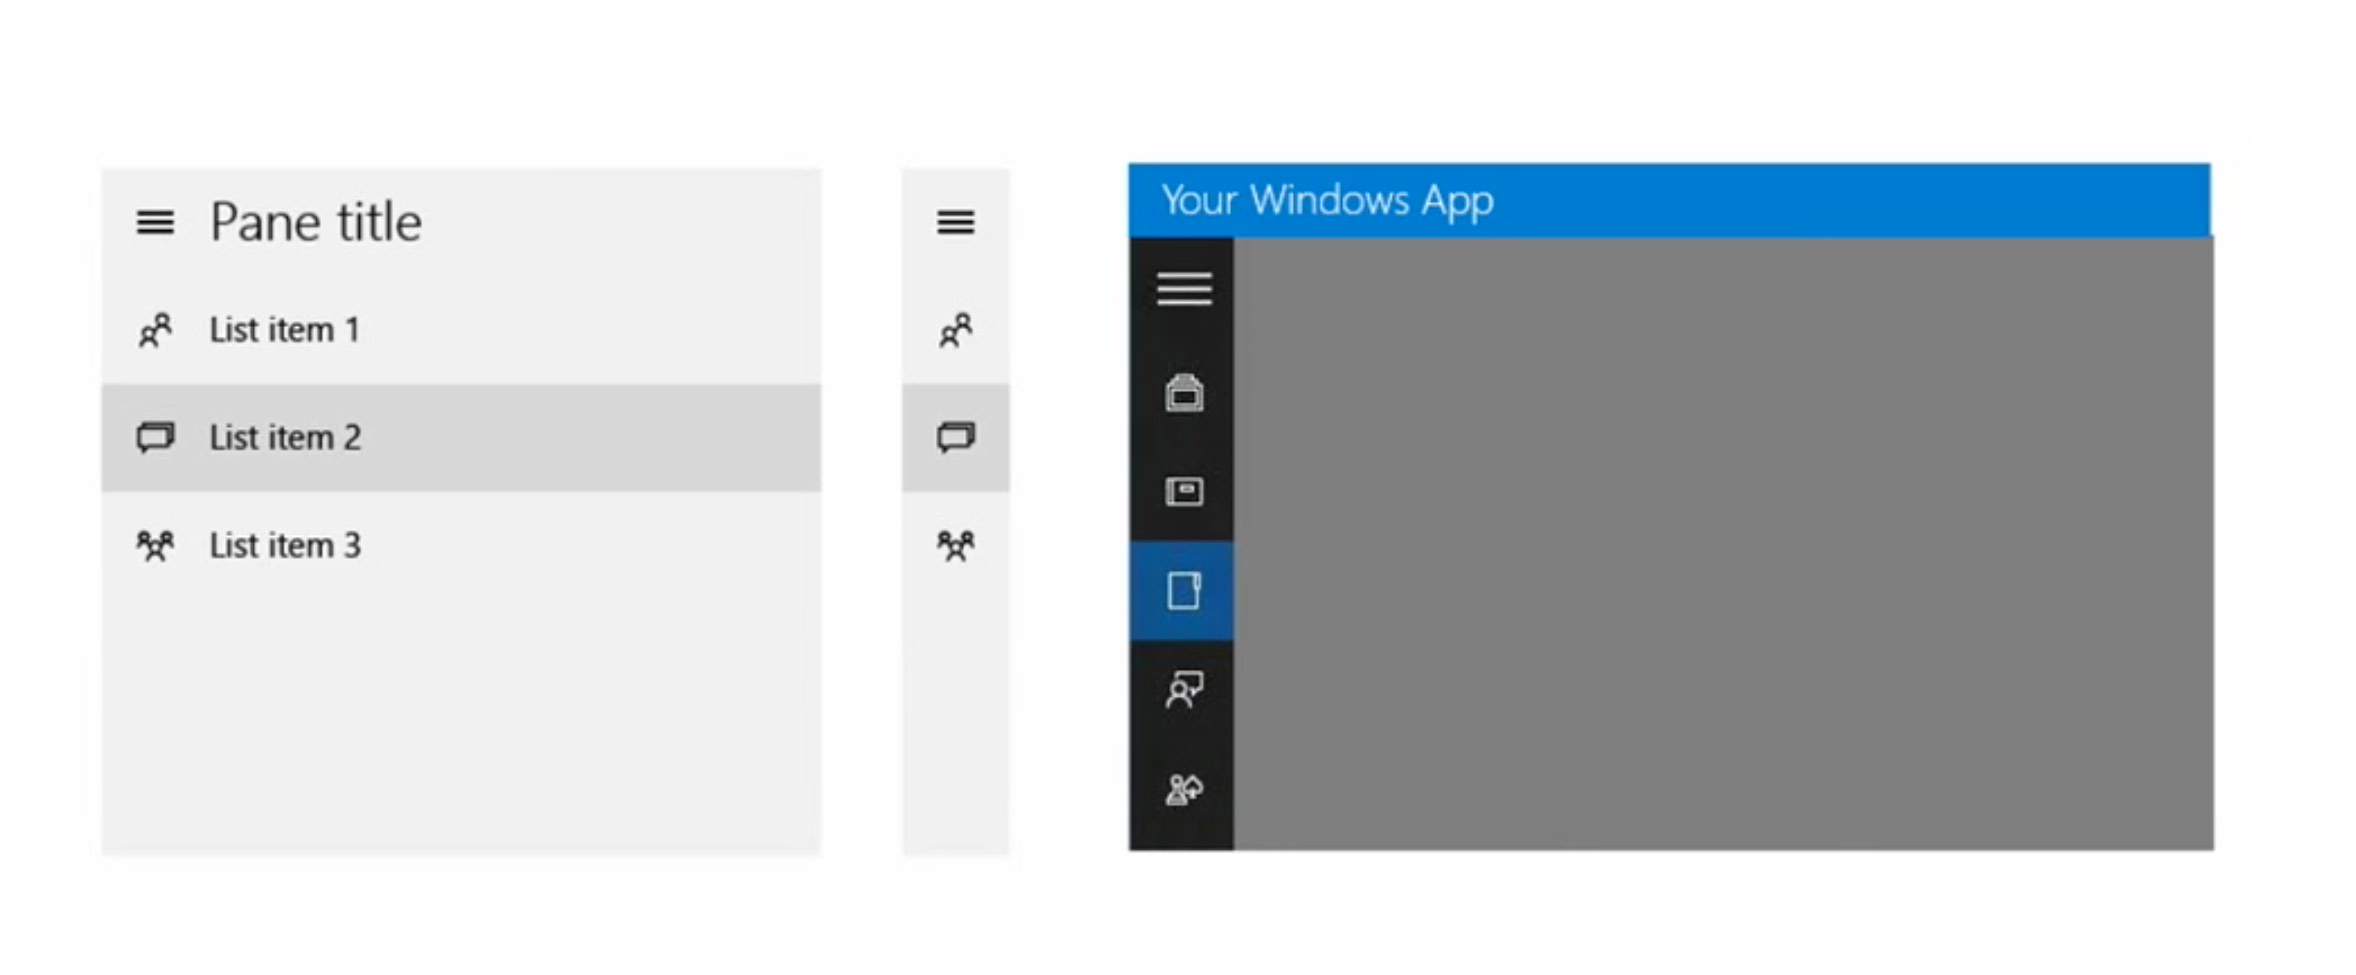 Split view in Windows 10